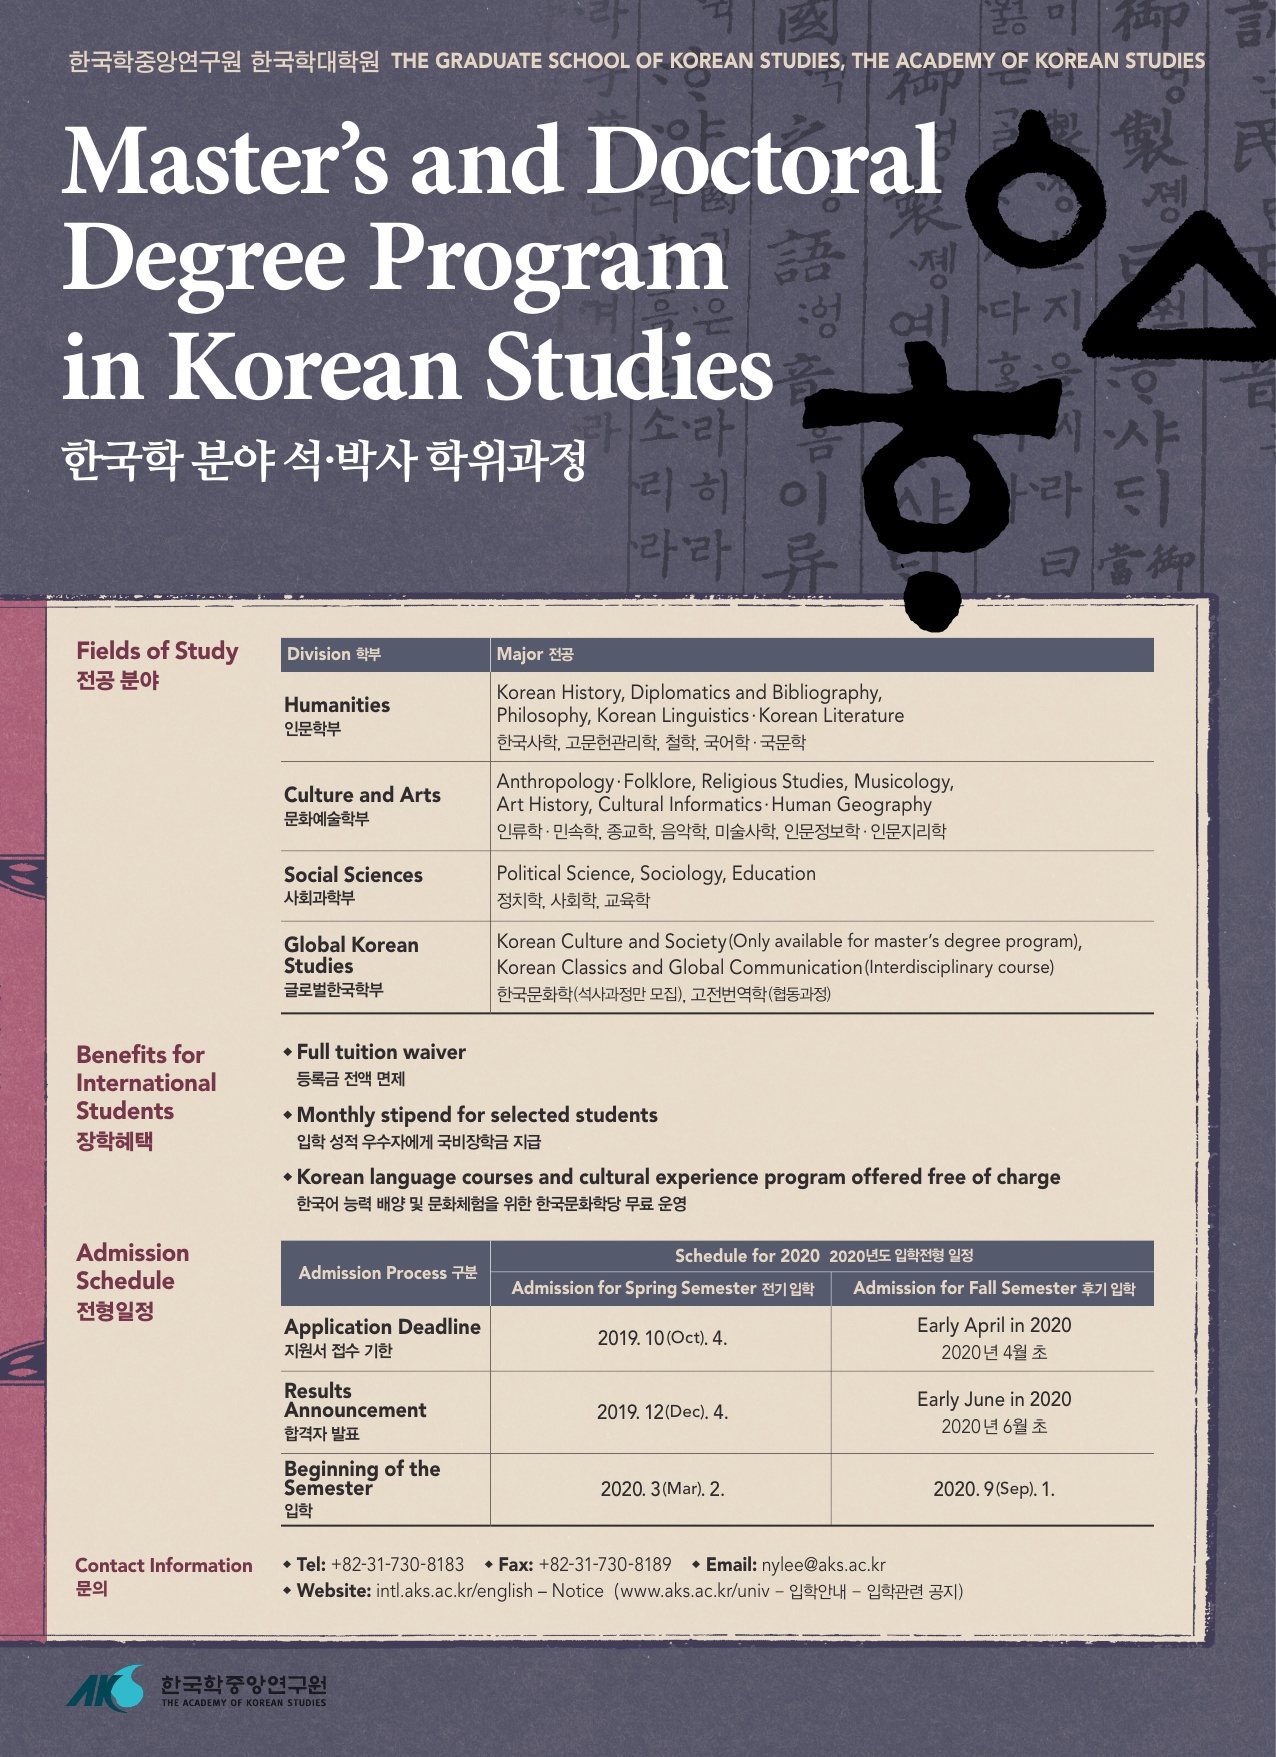 Master's and Doctoral Degree Program in Korean Studies 한국학 분야 석.박사 학위과정 모집 공고문 포스터